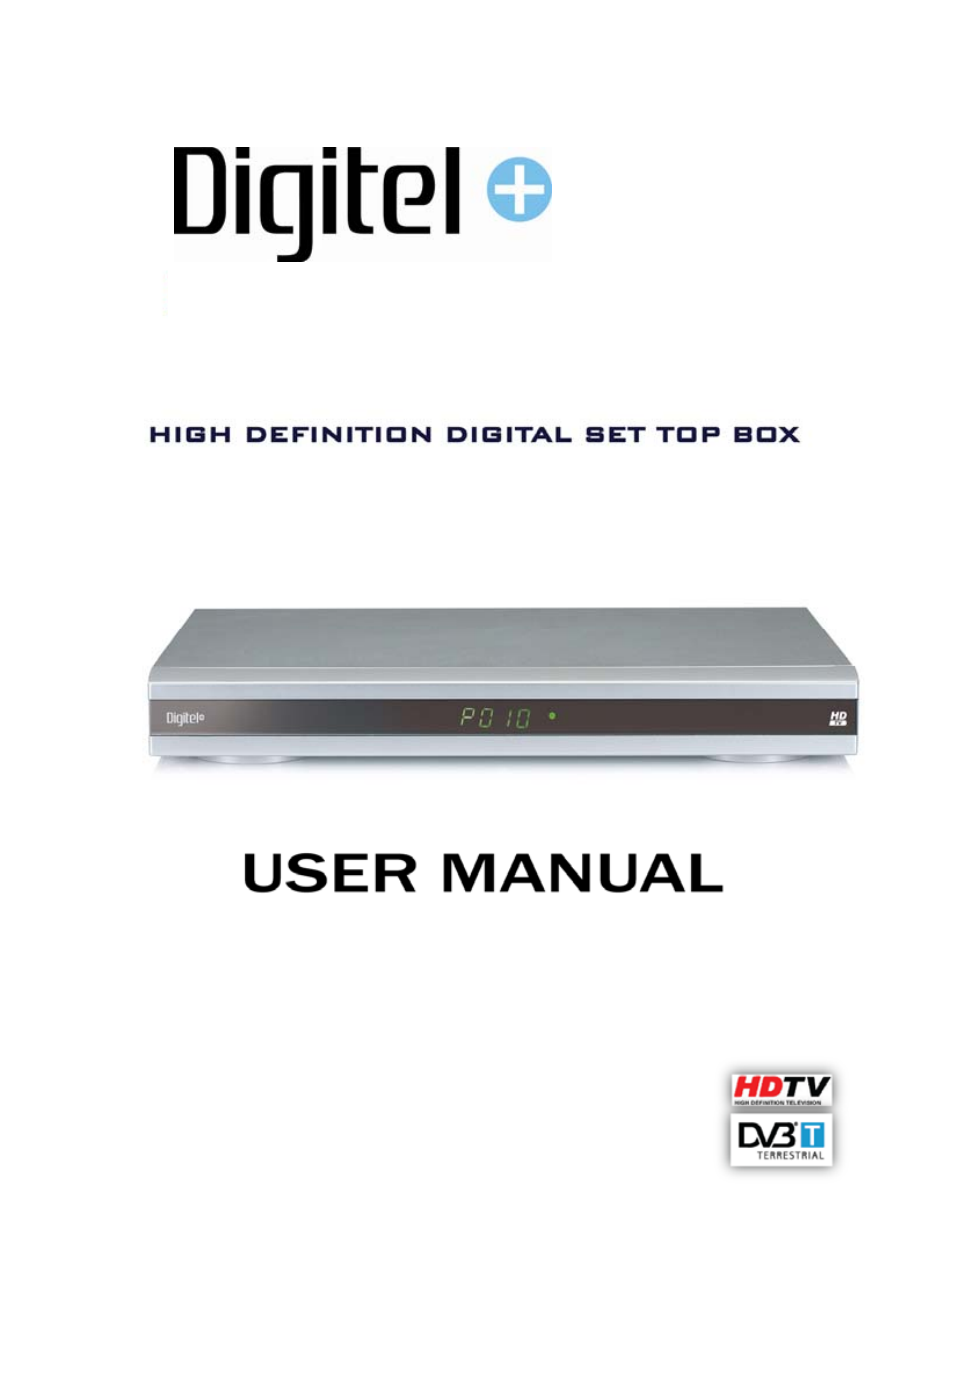 888 Digital High Definition Digital Set Top Box HD4000 User Manual | 27 pages